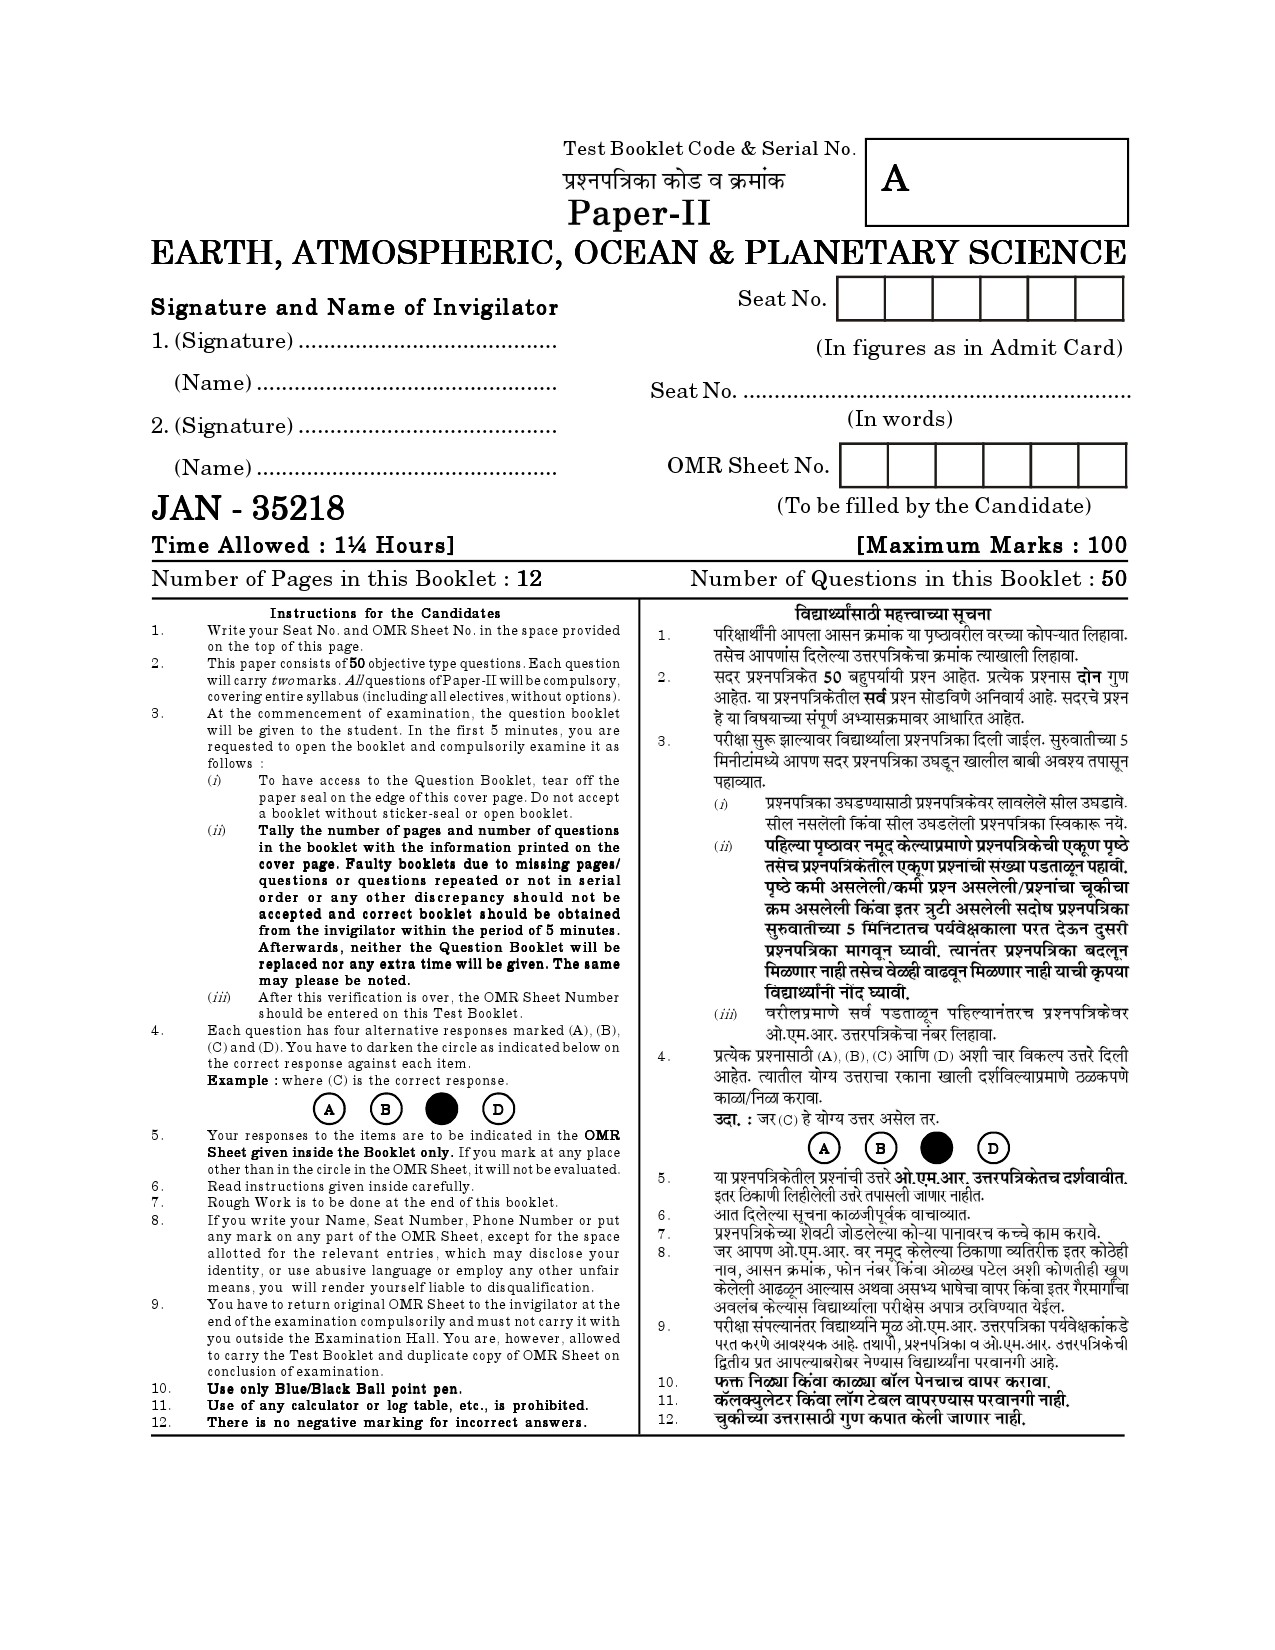 Maharashtra SET Earth Atmospheric Ocean Planetary Science Question Paper II January 2018 1